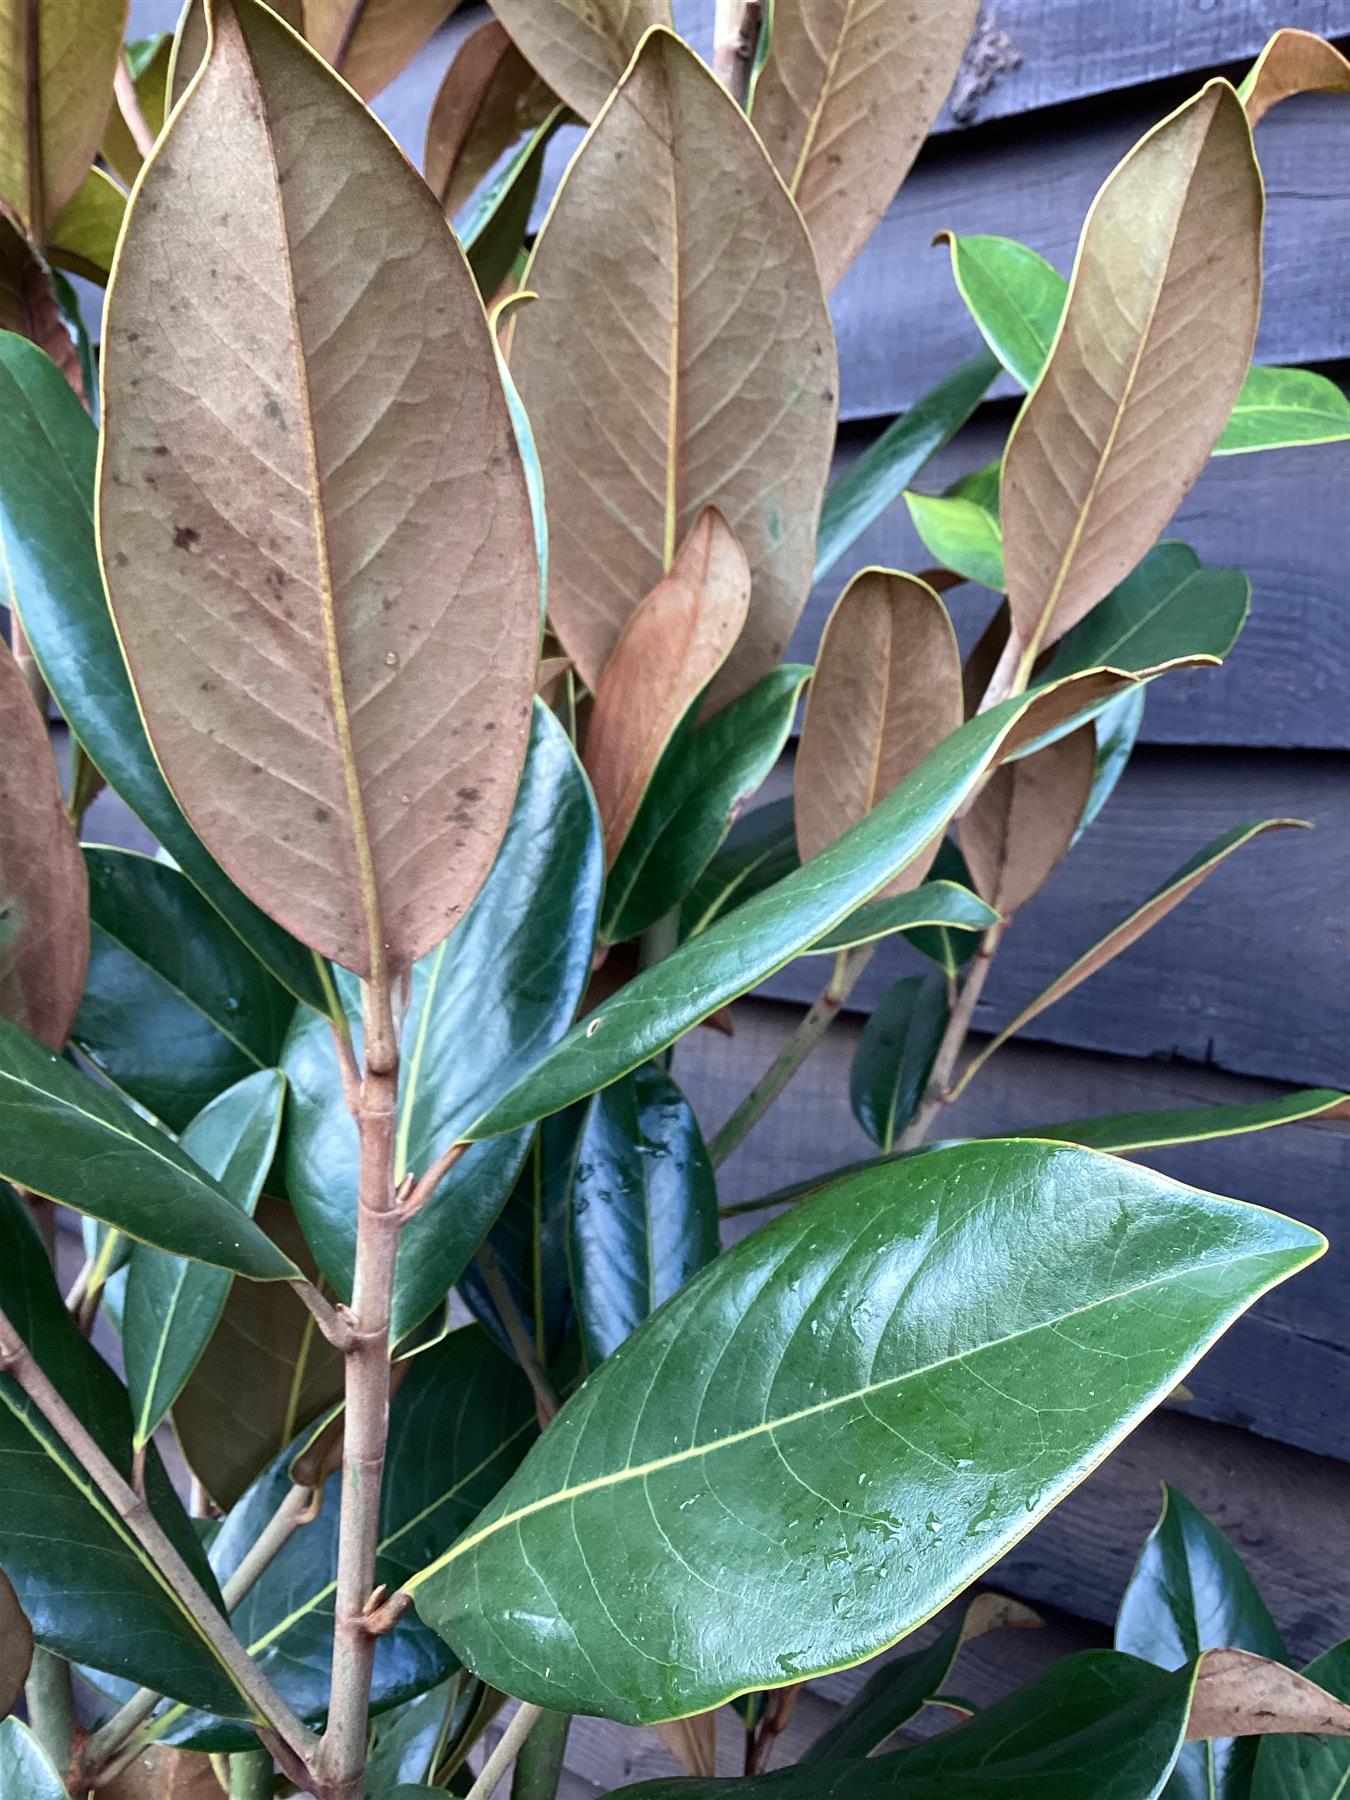 Magnolia grandiflora | Evergreen Magnolia - Bush - Large Shrub - Height 150-170cm - 30lt